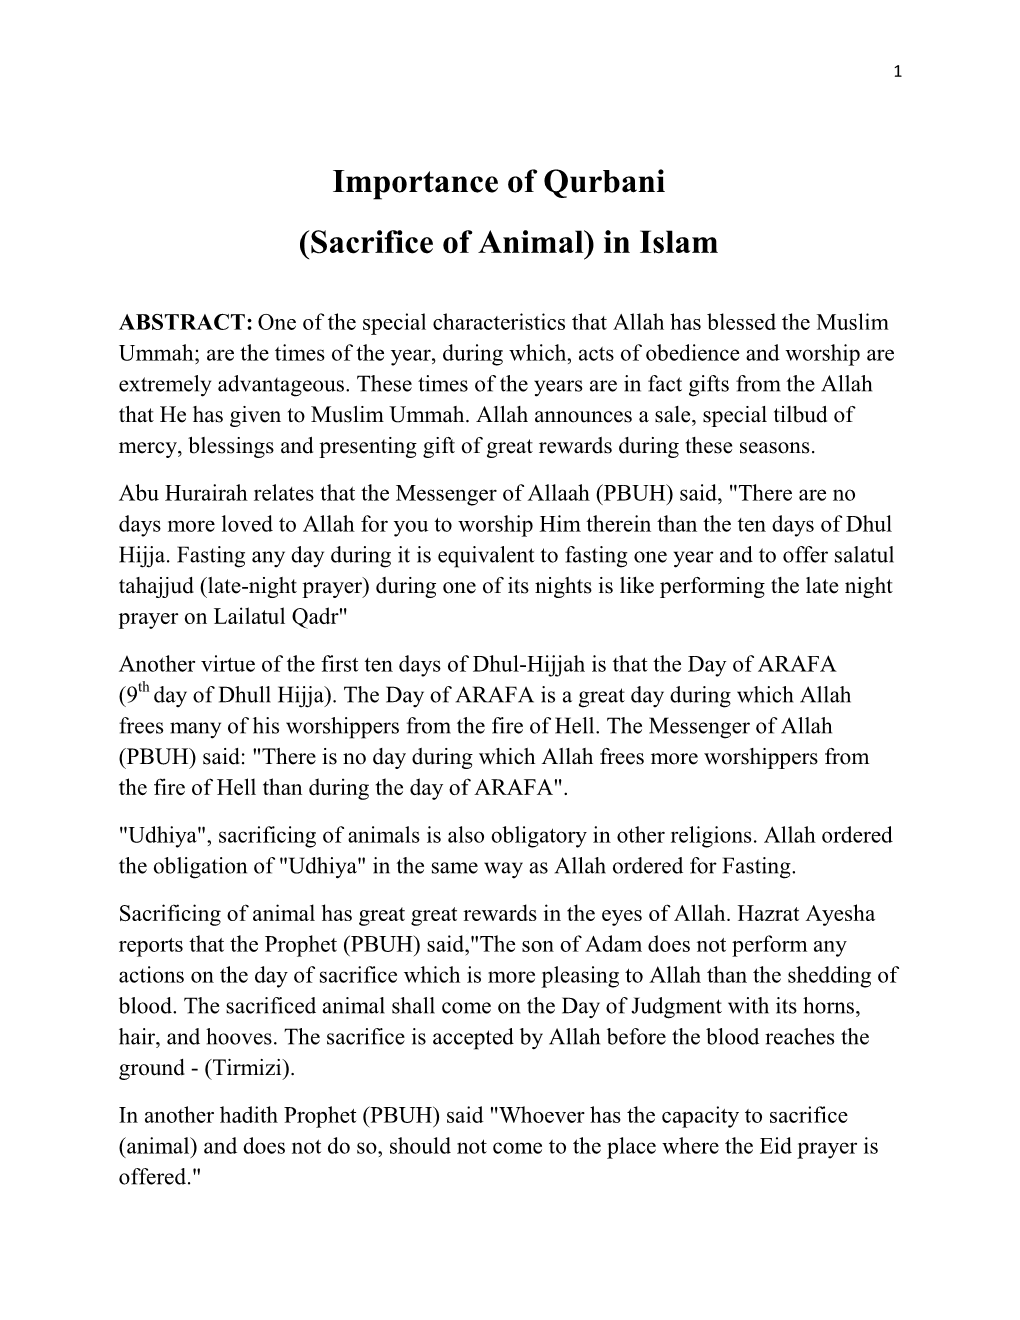 Importance of Qurbani (Sacrifice of Animal) in Islam